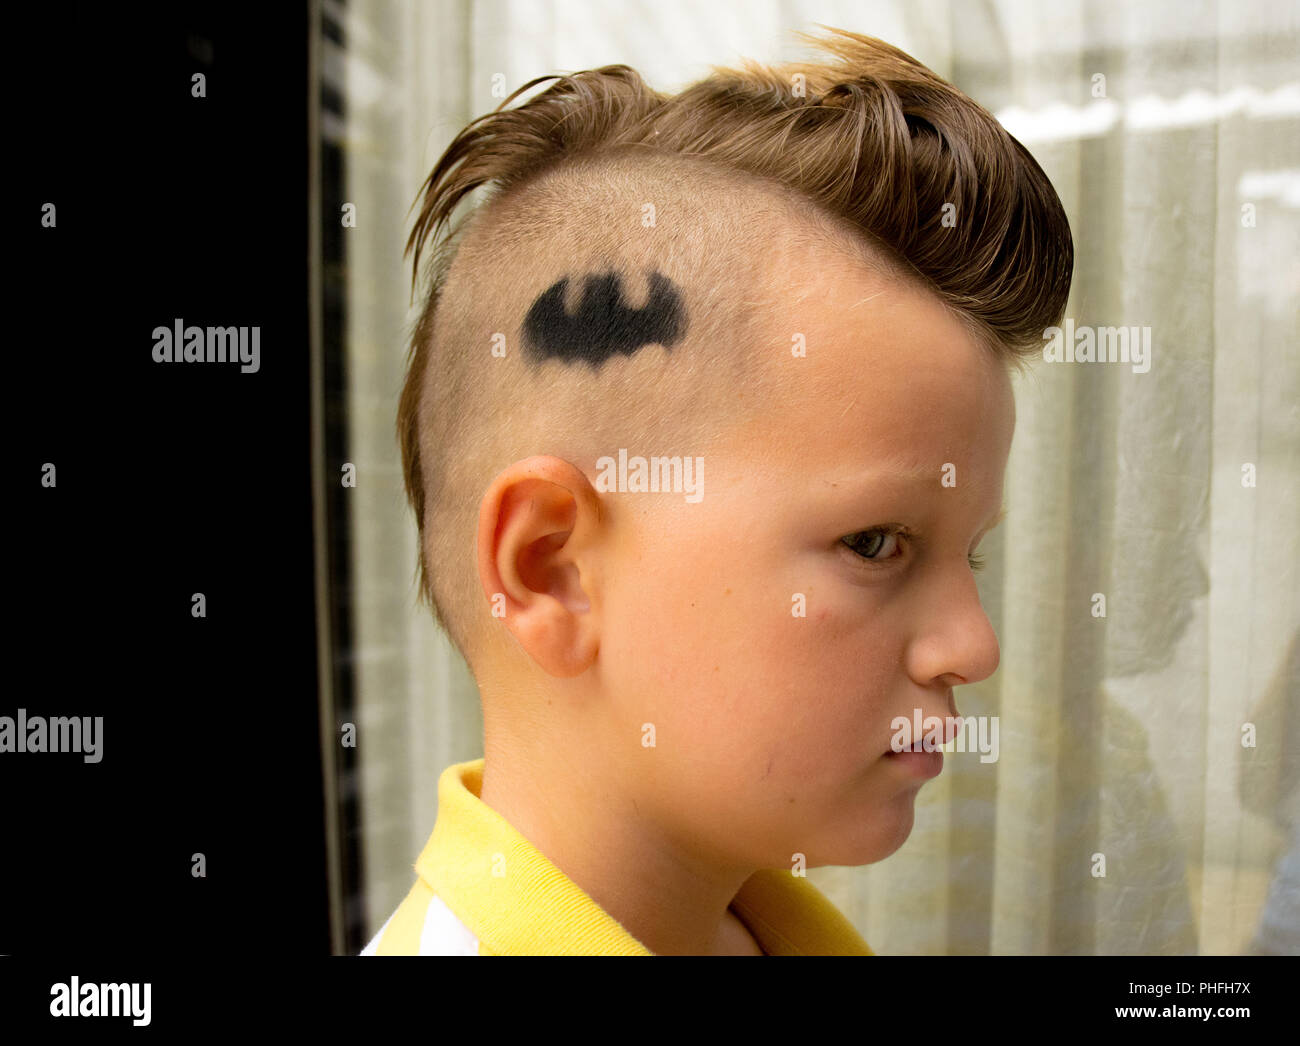 Child mohawk hairstyle Stock Photo - Alamy